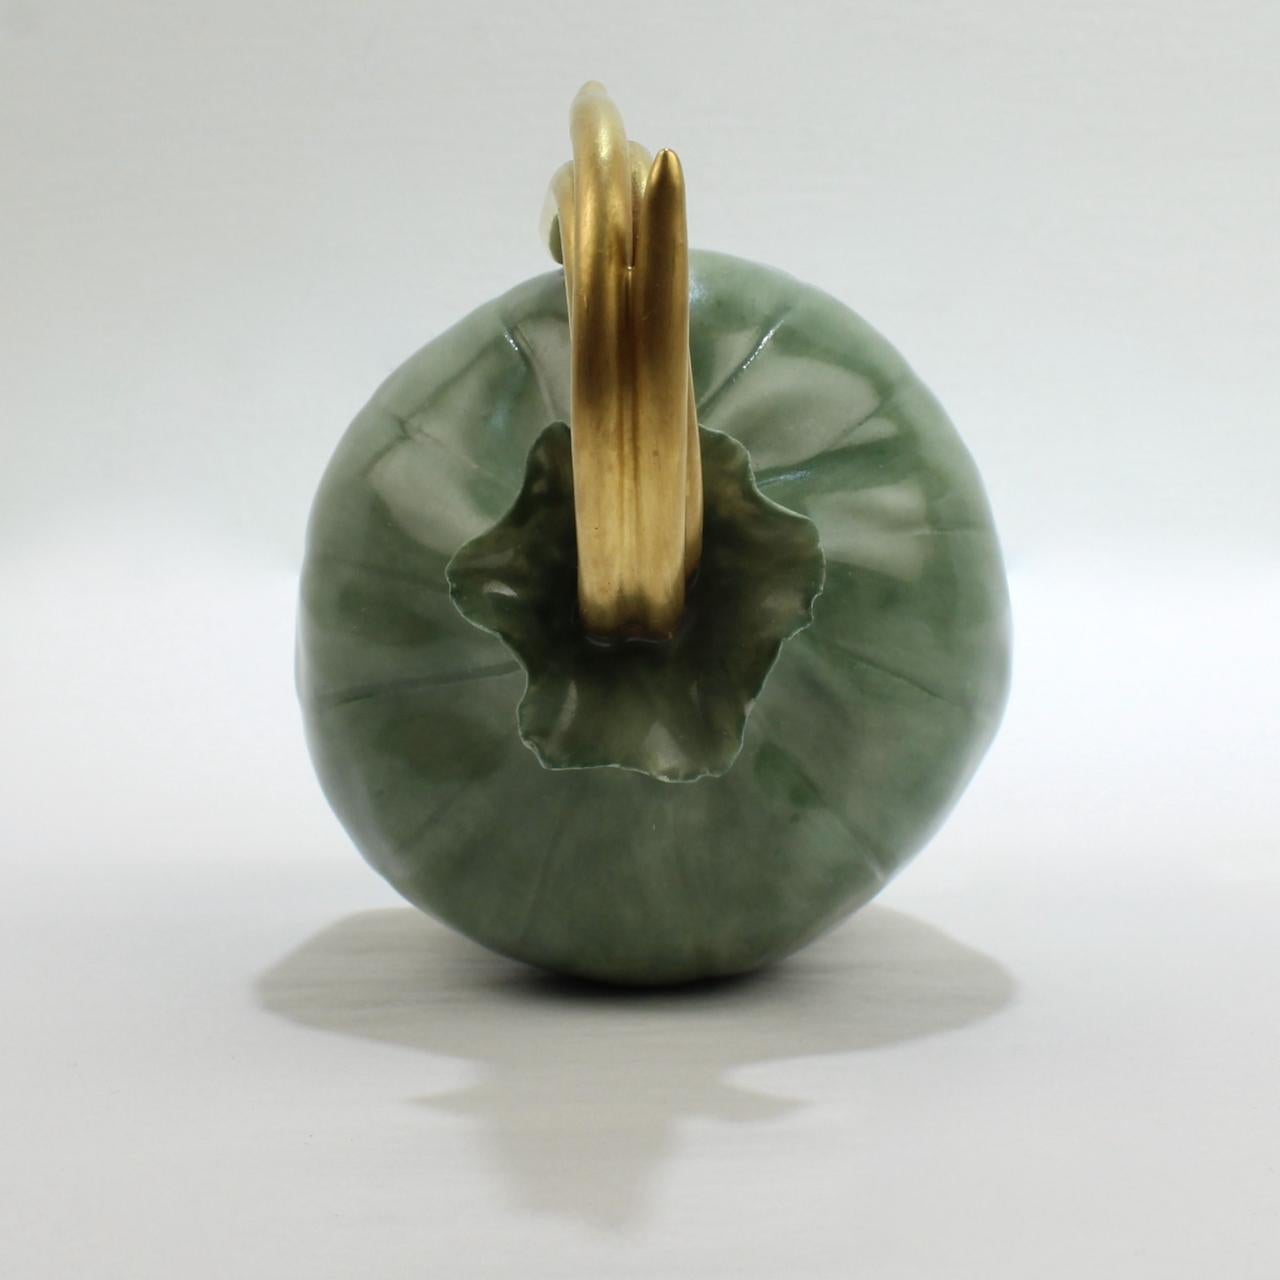 Modern Katherine Houston Porcelain Figural Green Onion Model or Figurine